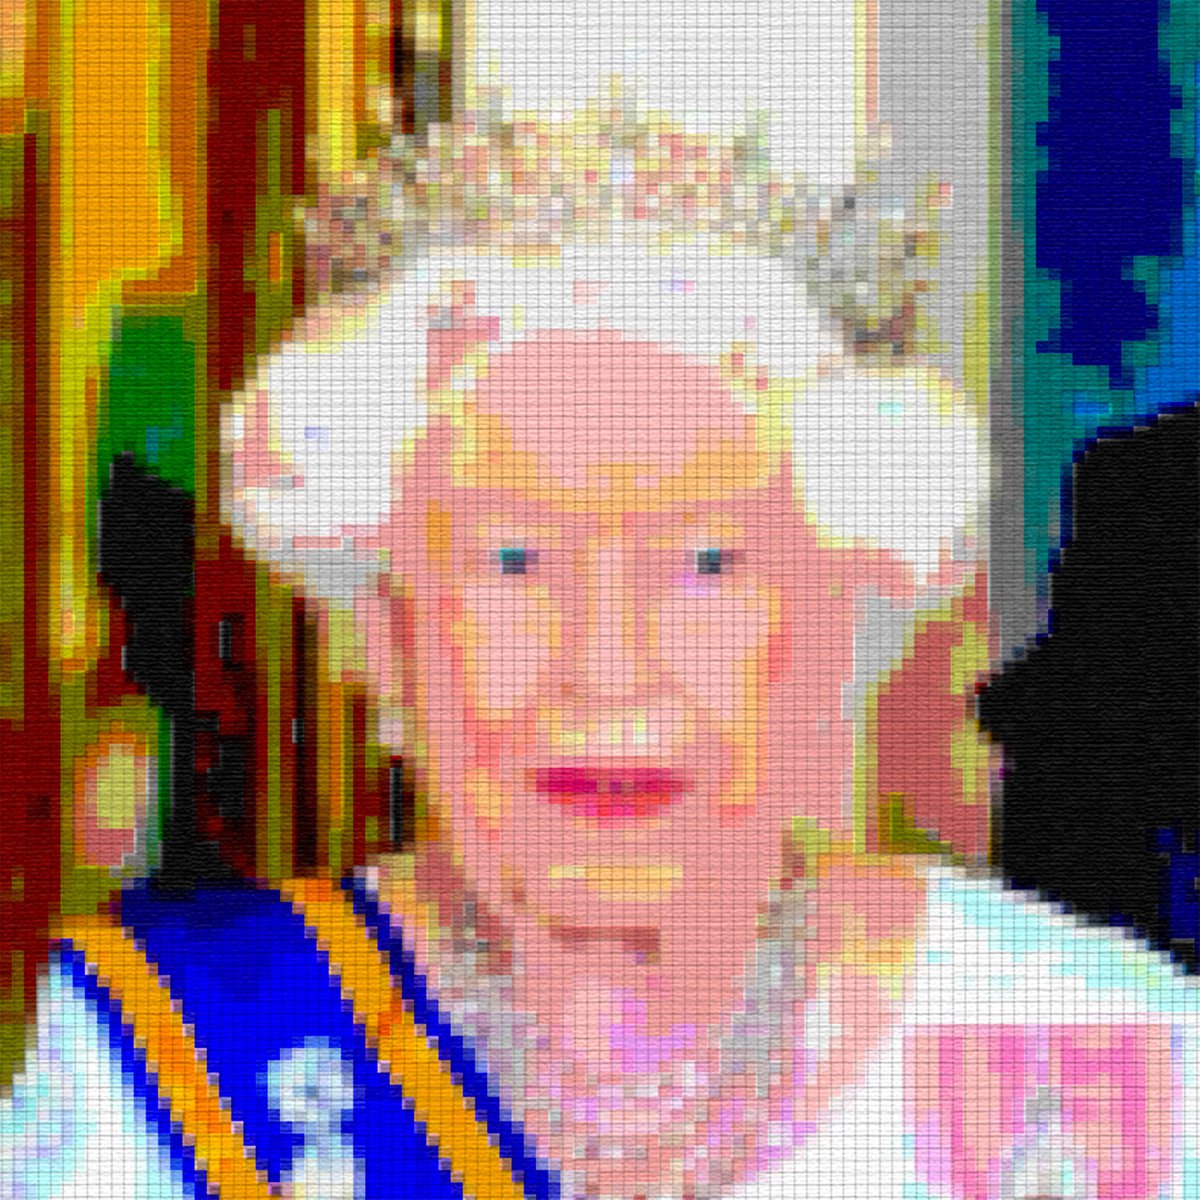 GA#146 Queen Elizabeth II by Mattia Paoli